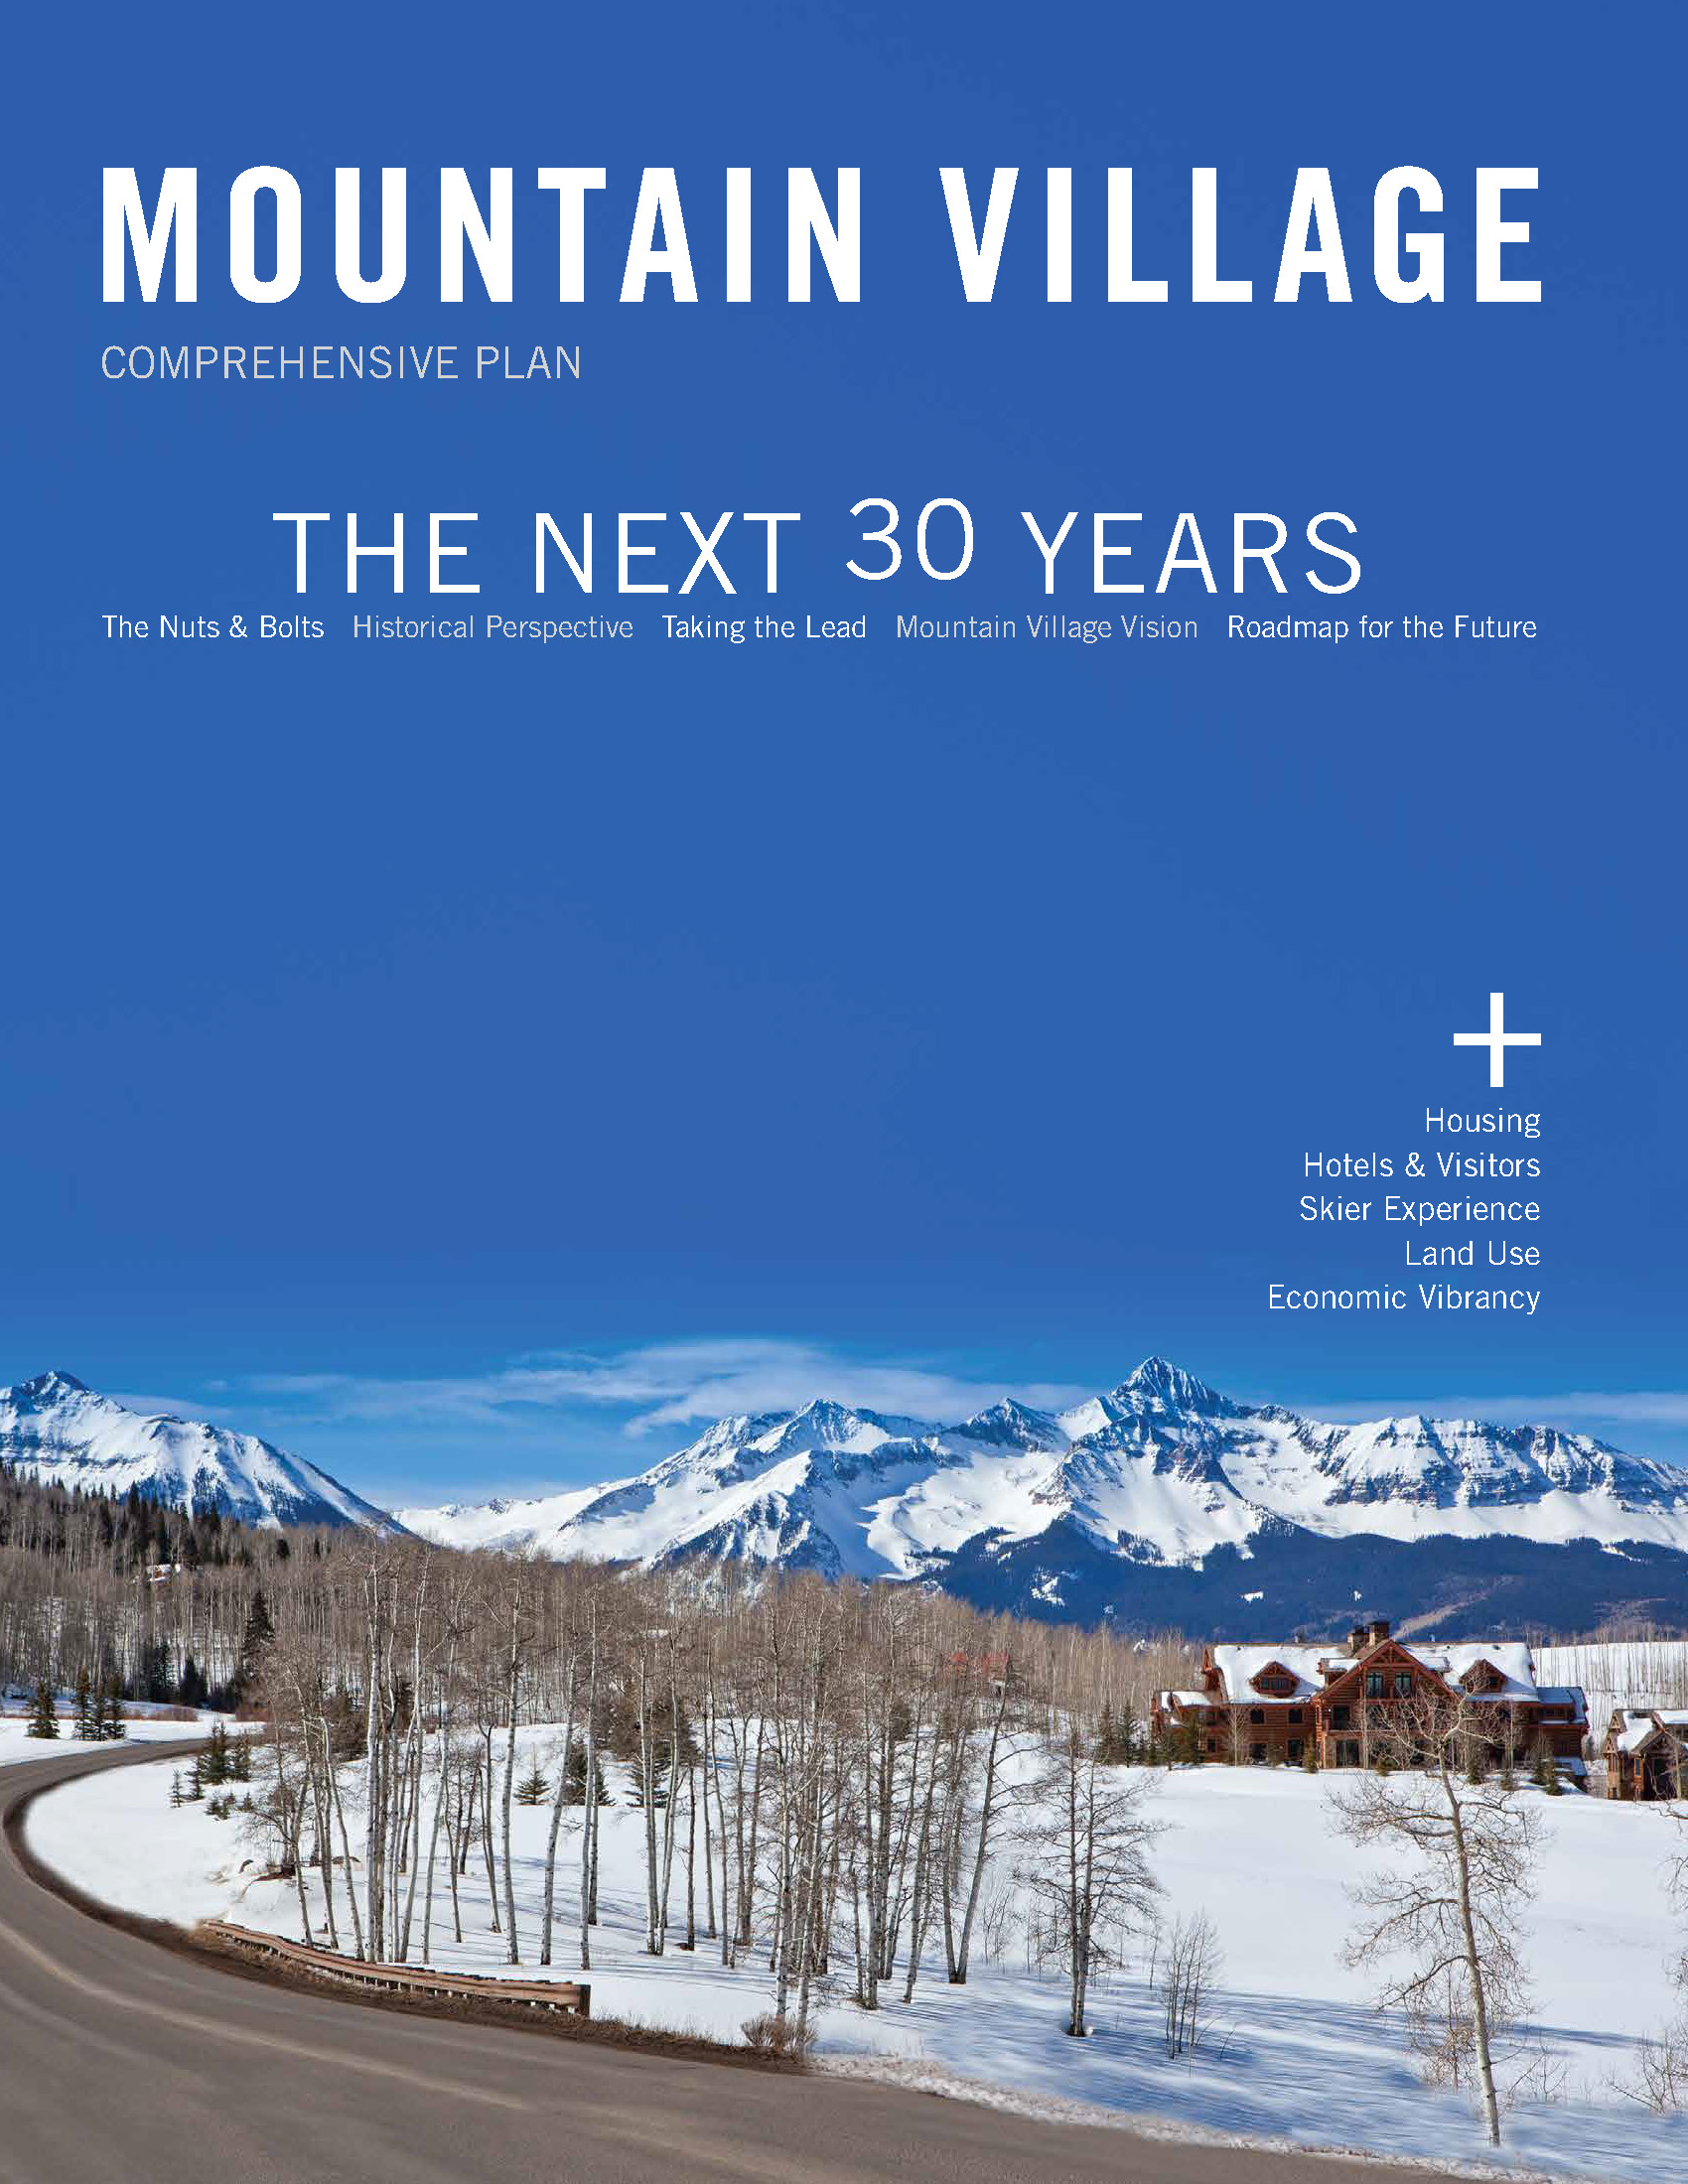 Mountain Village Comprehensive Plan Cover Photo - Copy - Copy.jpg